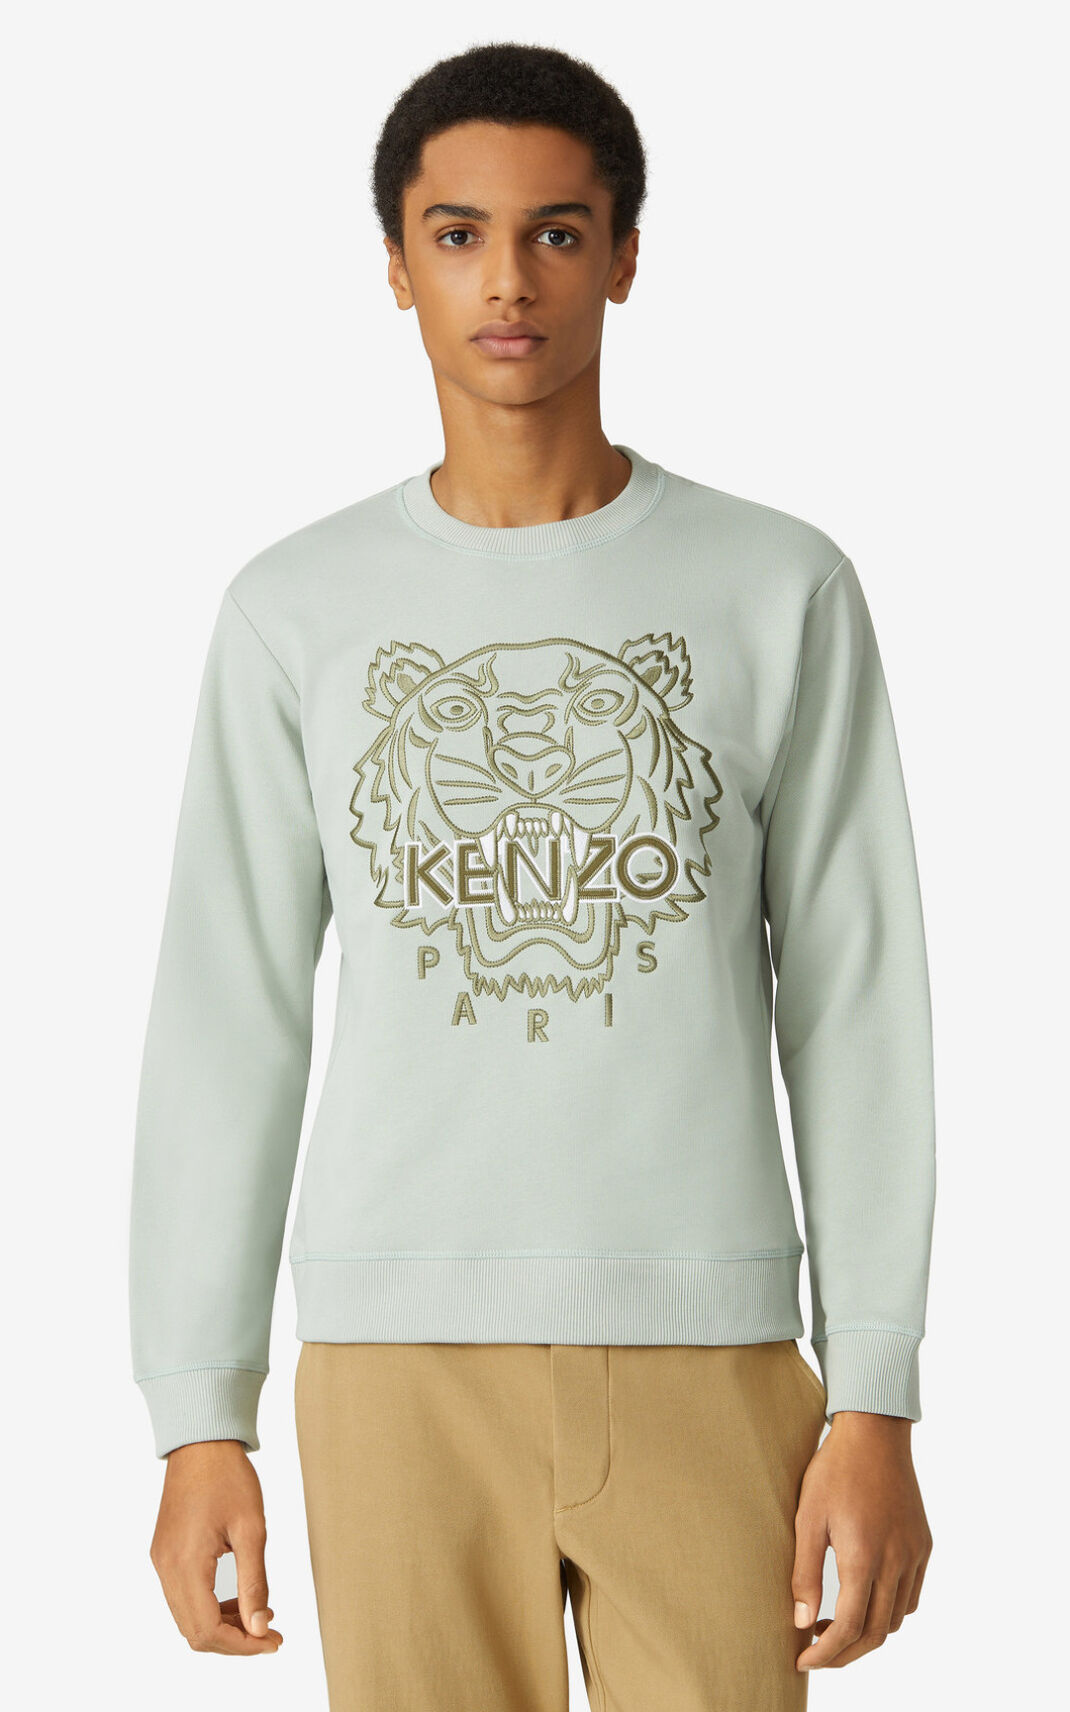 Kenzo Tiger Sweatshirt Olive Green For Mens 1076NZEVF